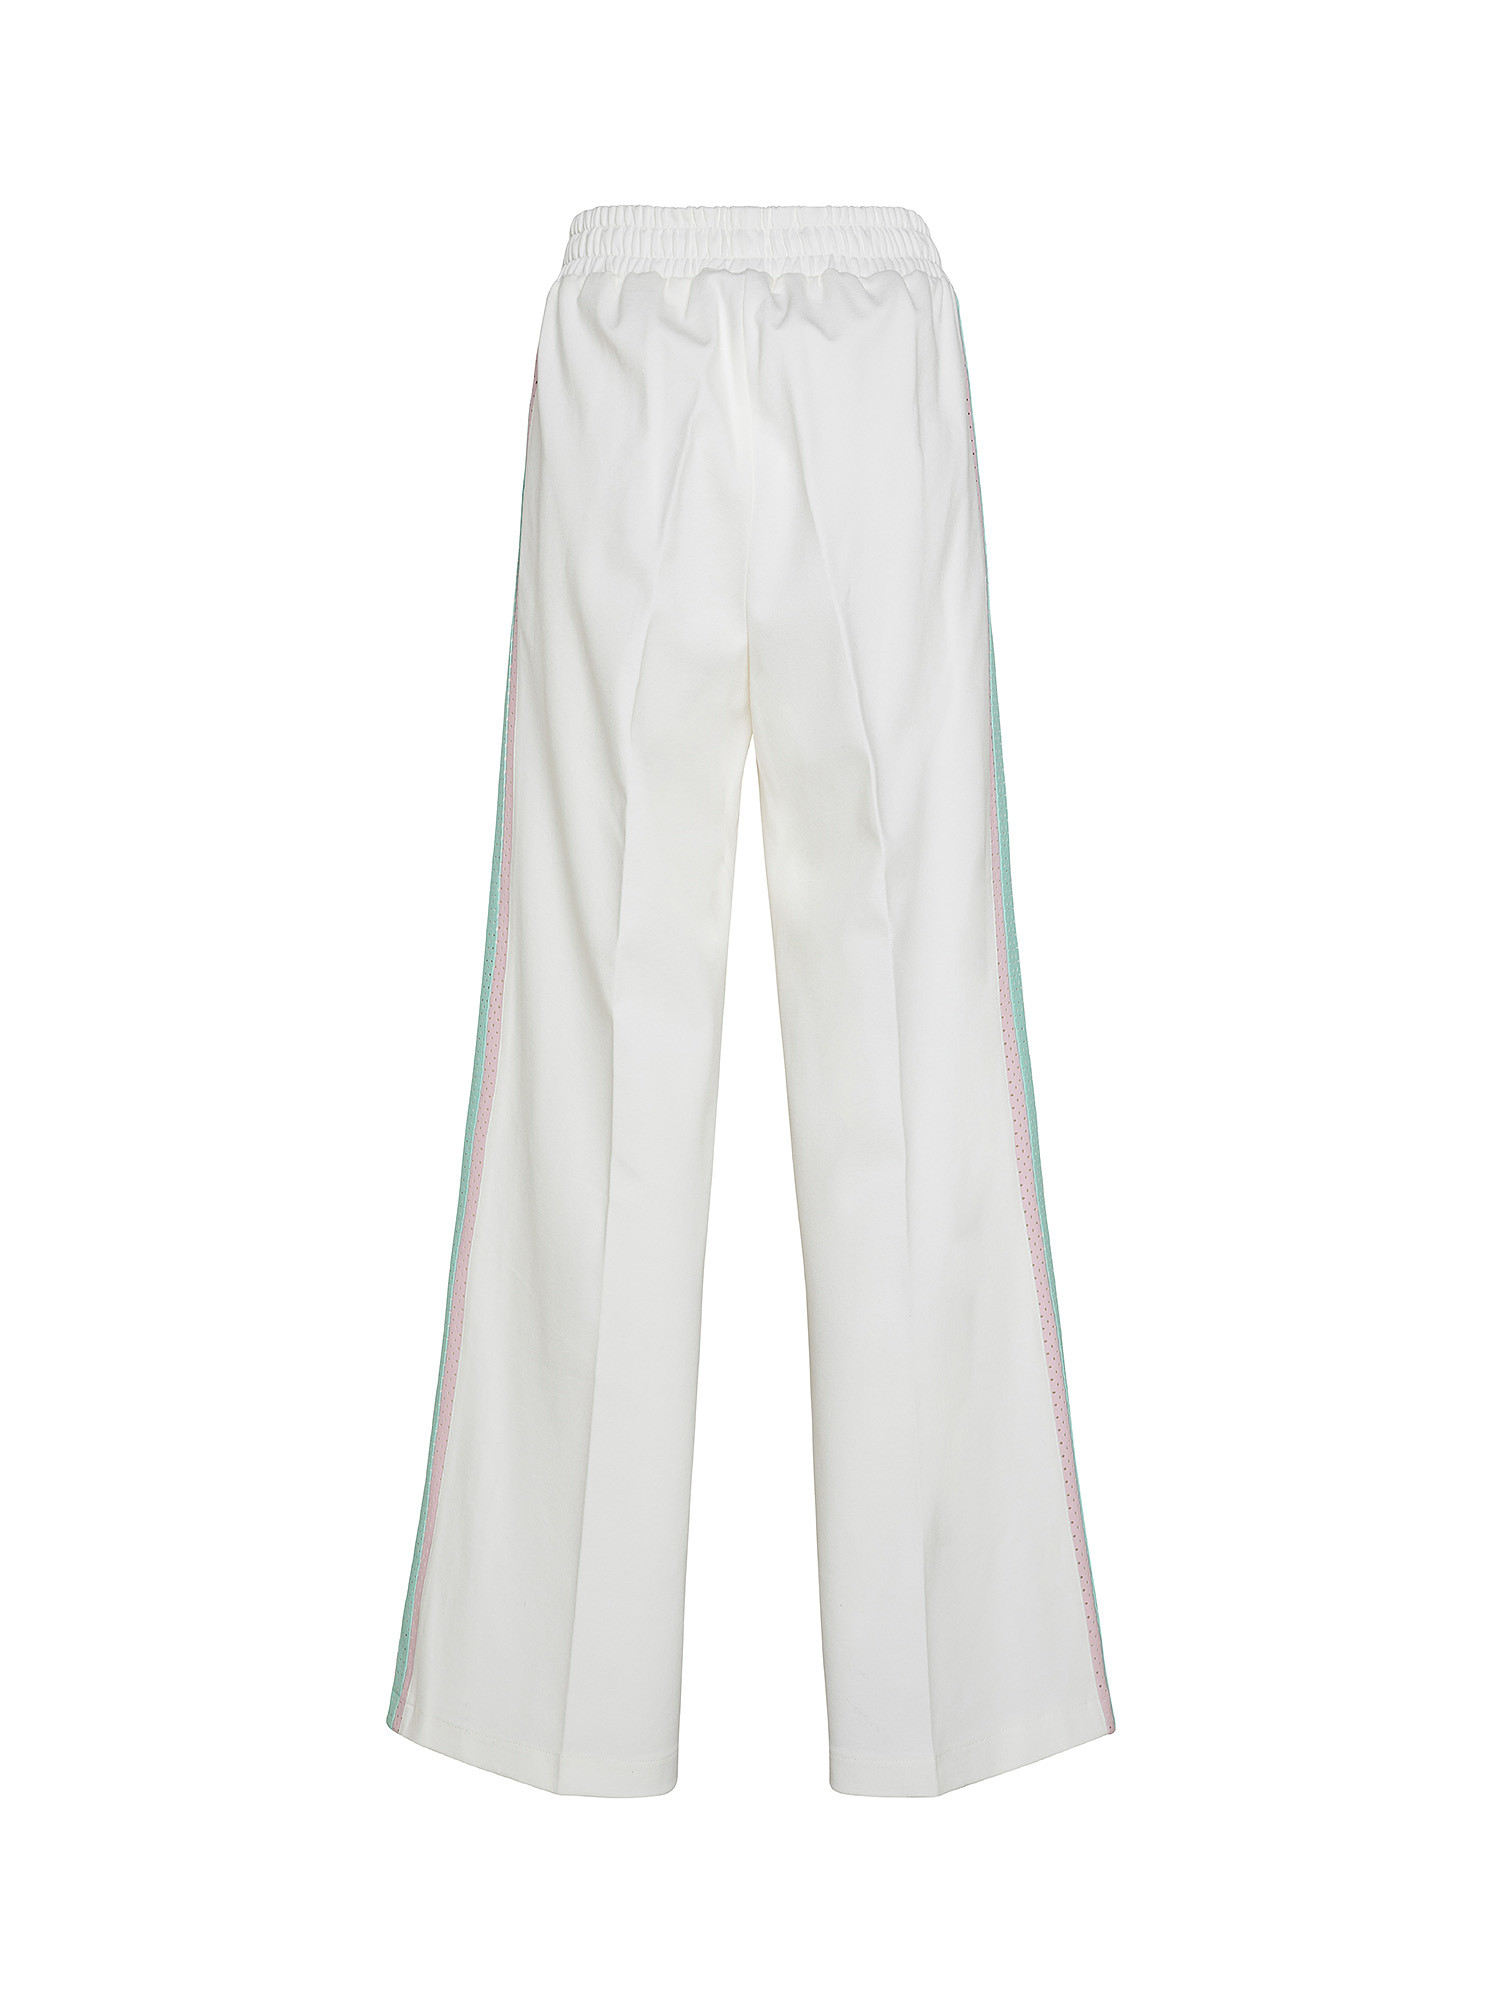 Pantalone con inserti traforati, Bianco, large image number 1